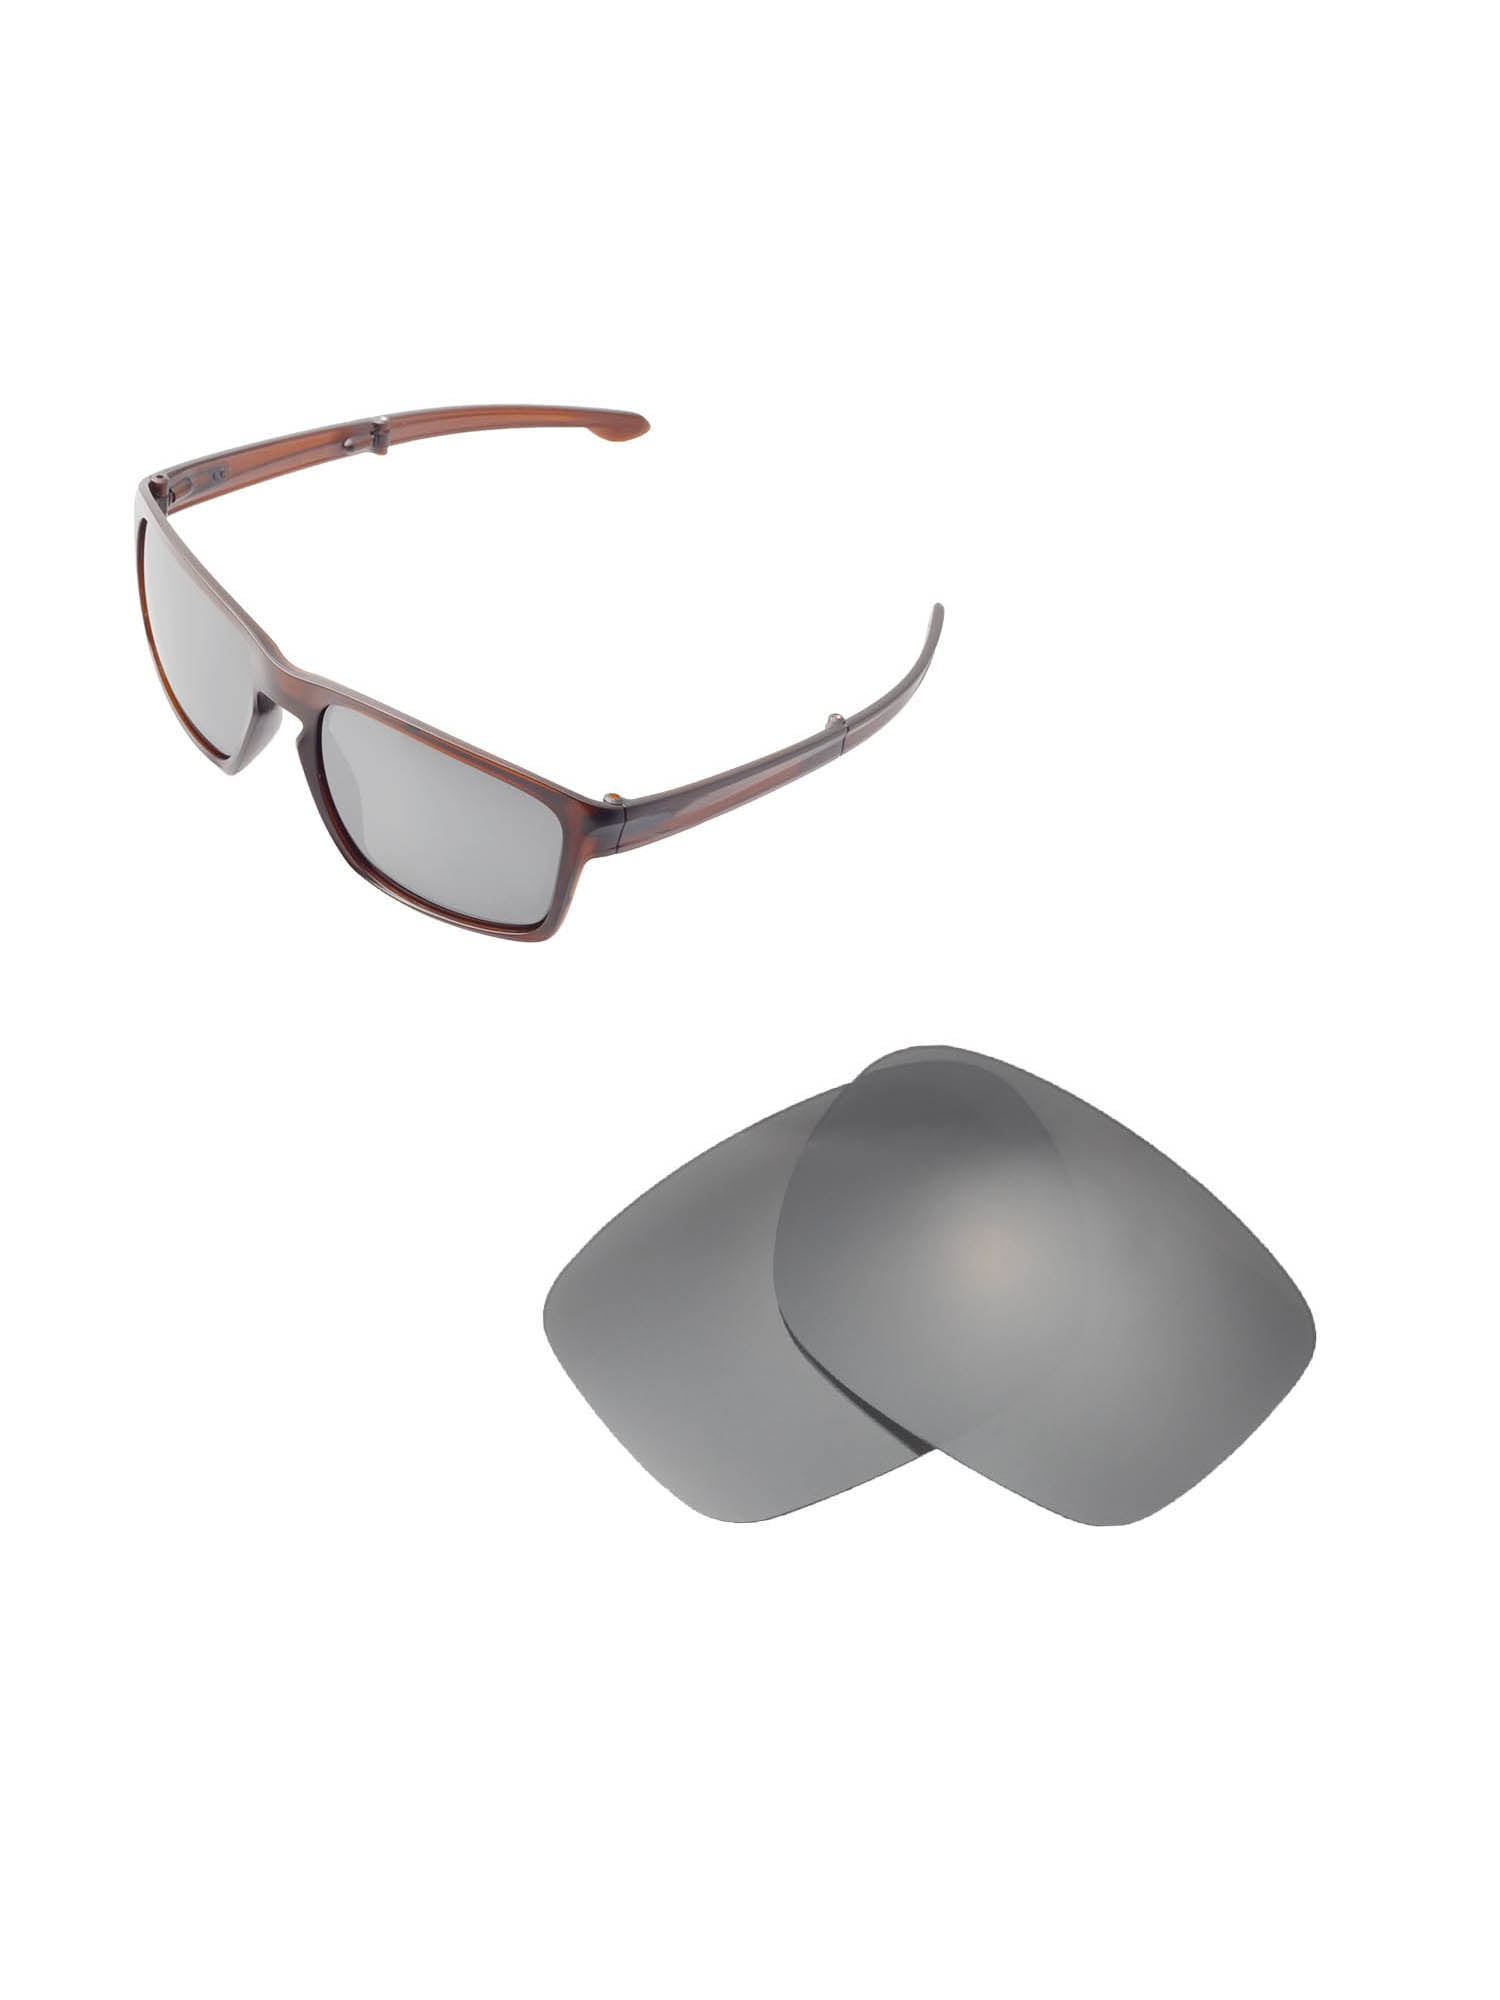 Walleva Polarized Replacement Lenses for Oakley Sliver F Sunglasses - Walmart.com